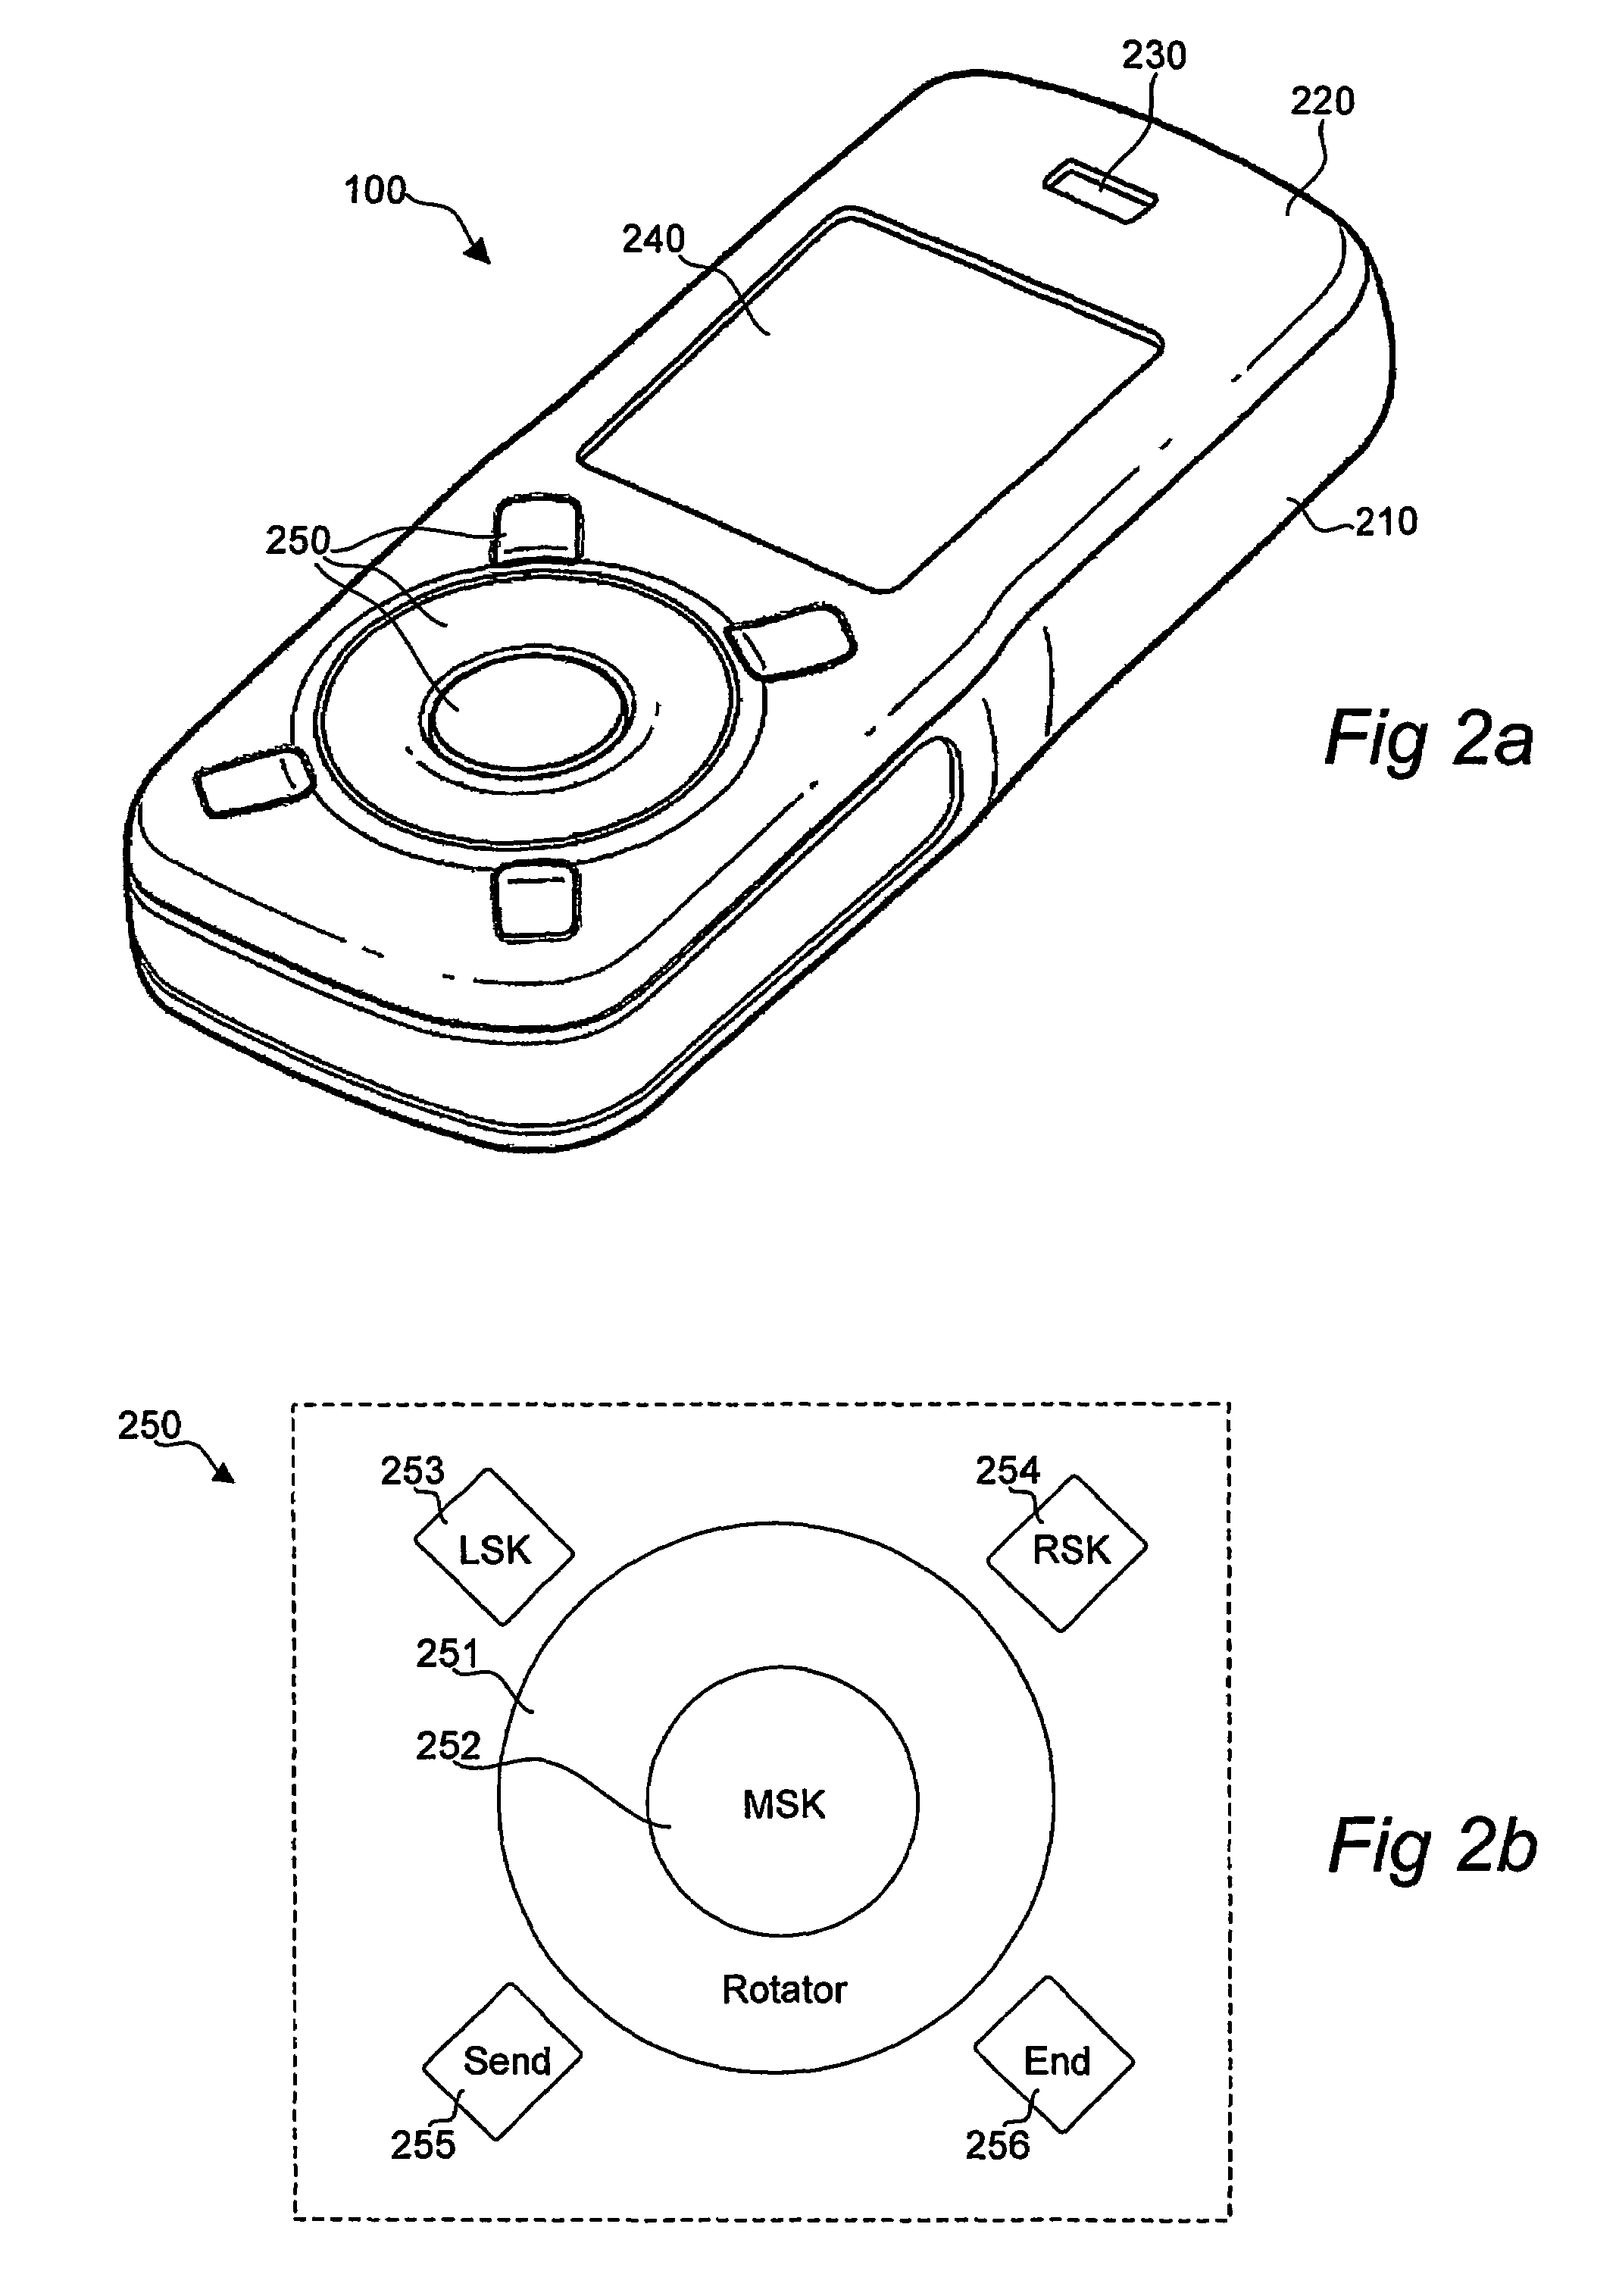 Mobile telephone having a rotator input device